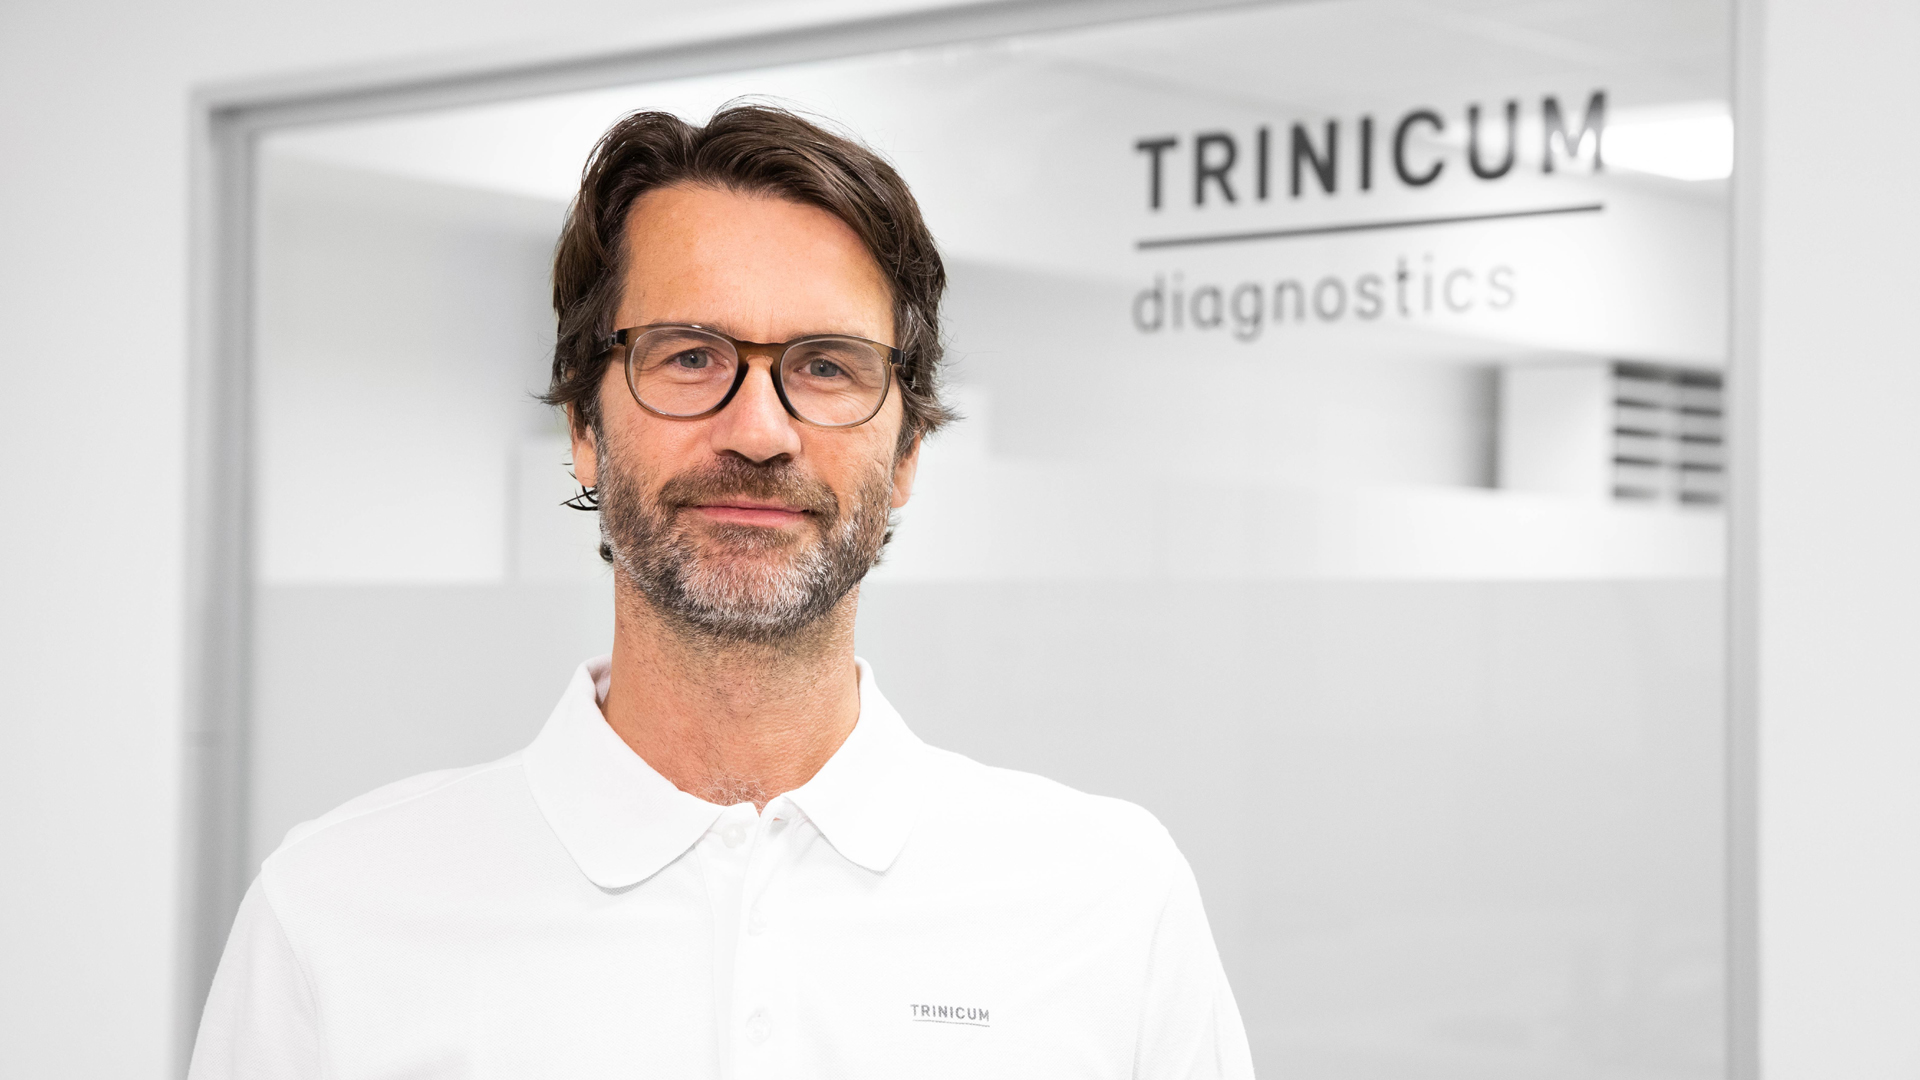 Dr. Günther Malek, Trinicum diagnostics